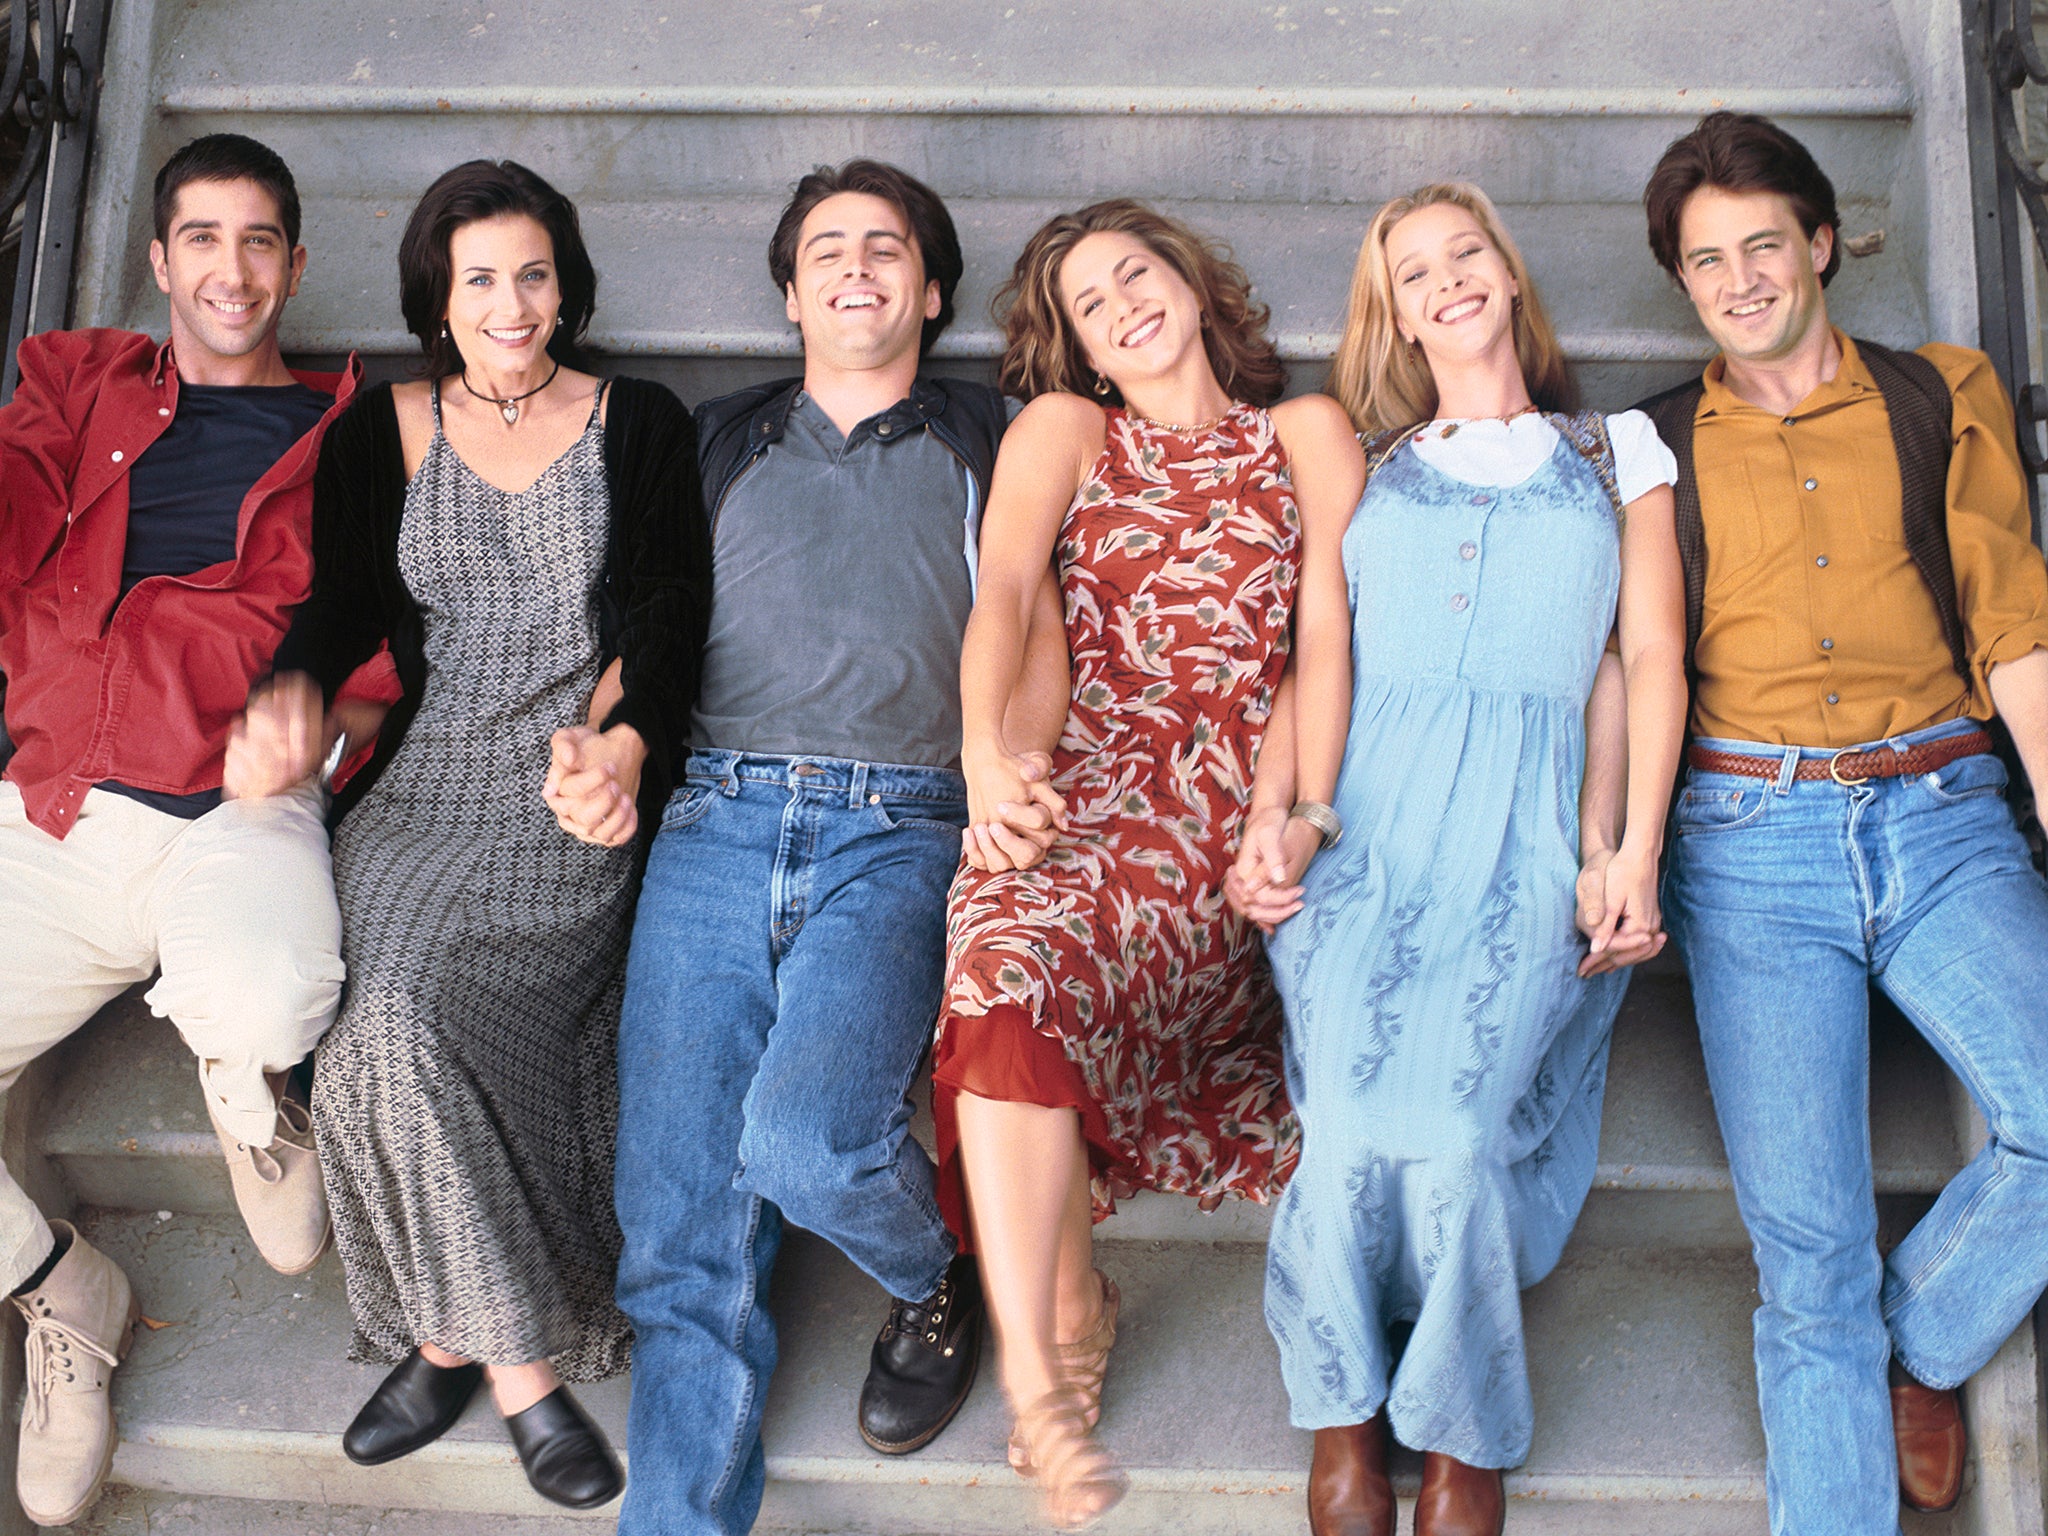 TV shows like ‘Friends’ were a big fashion influence on the Nineties teen